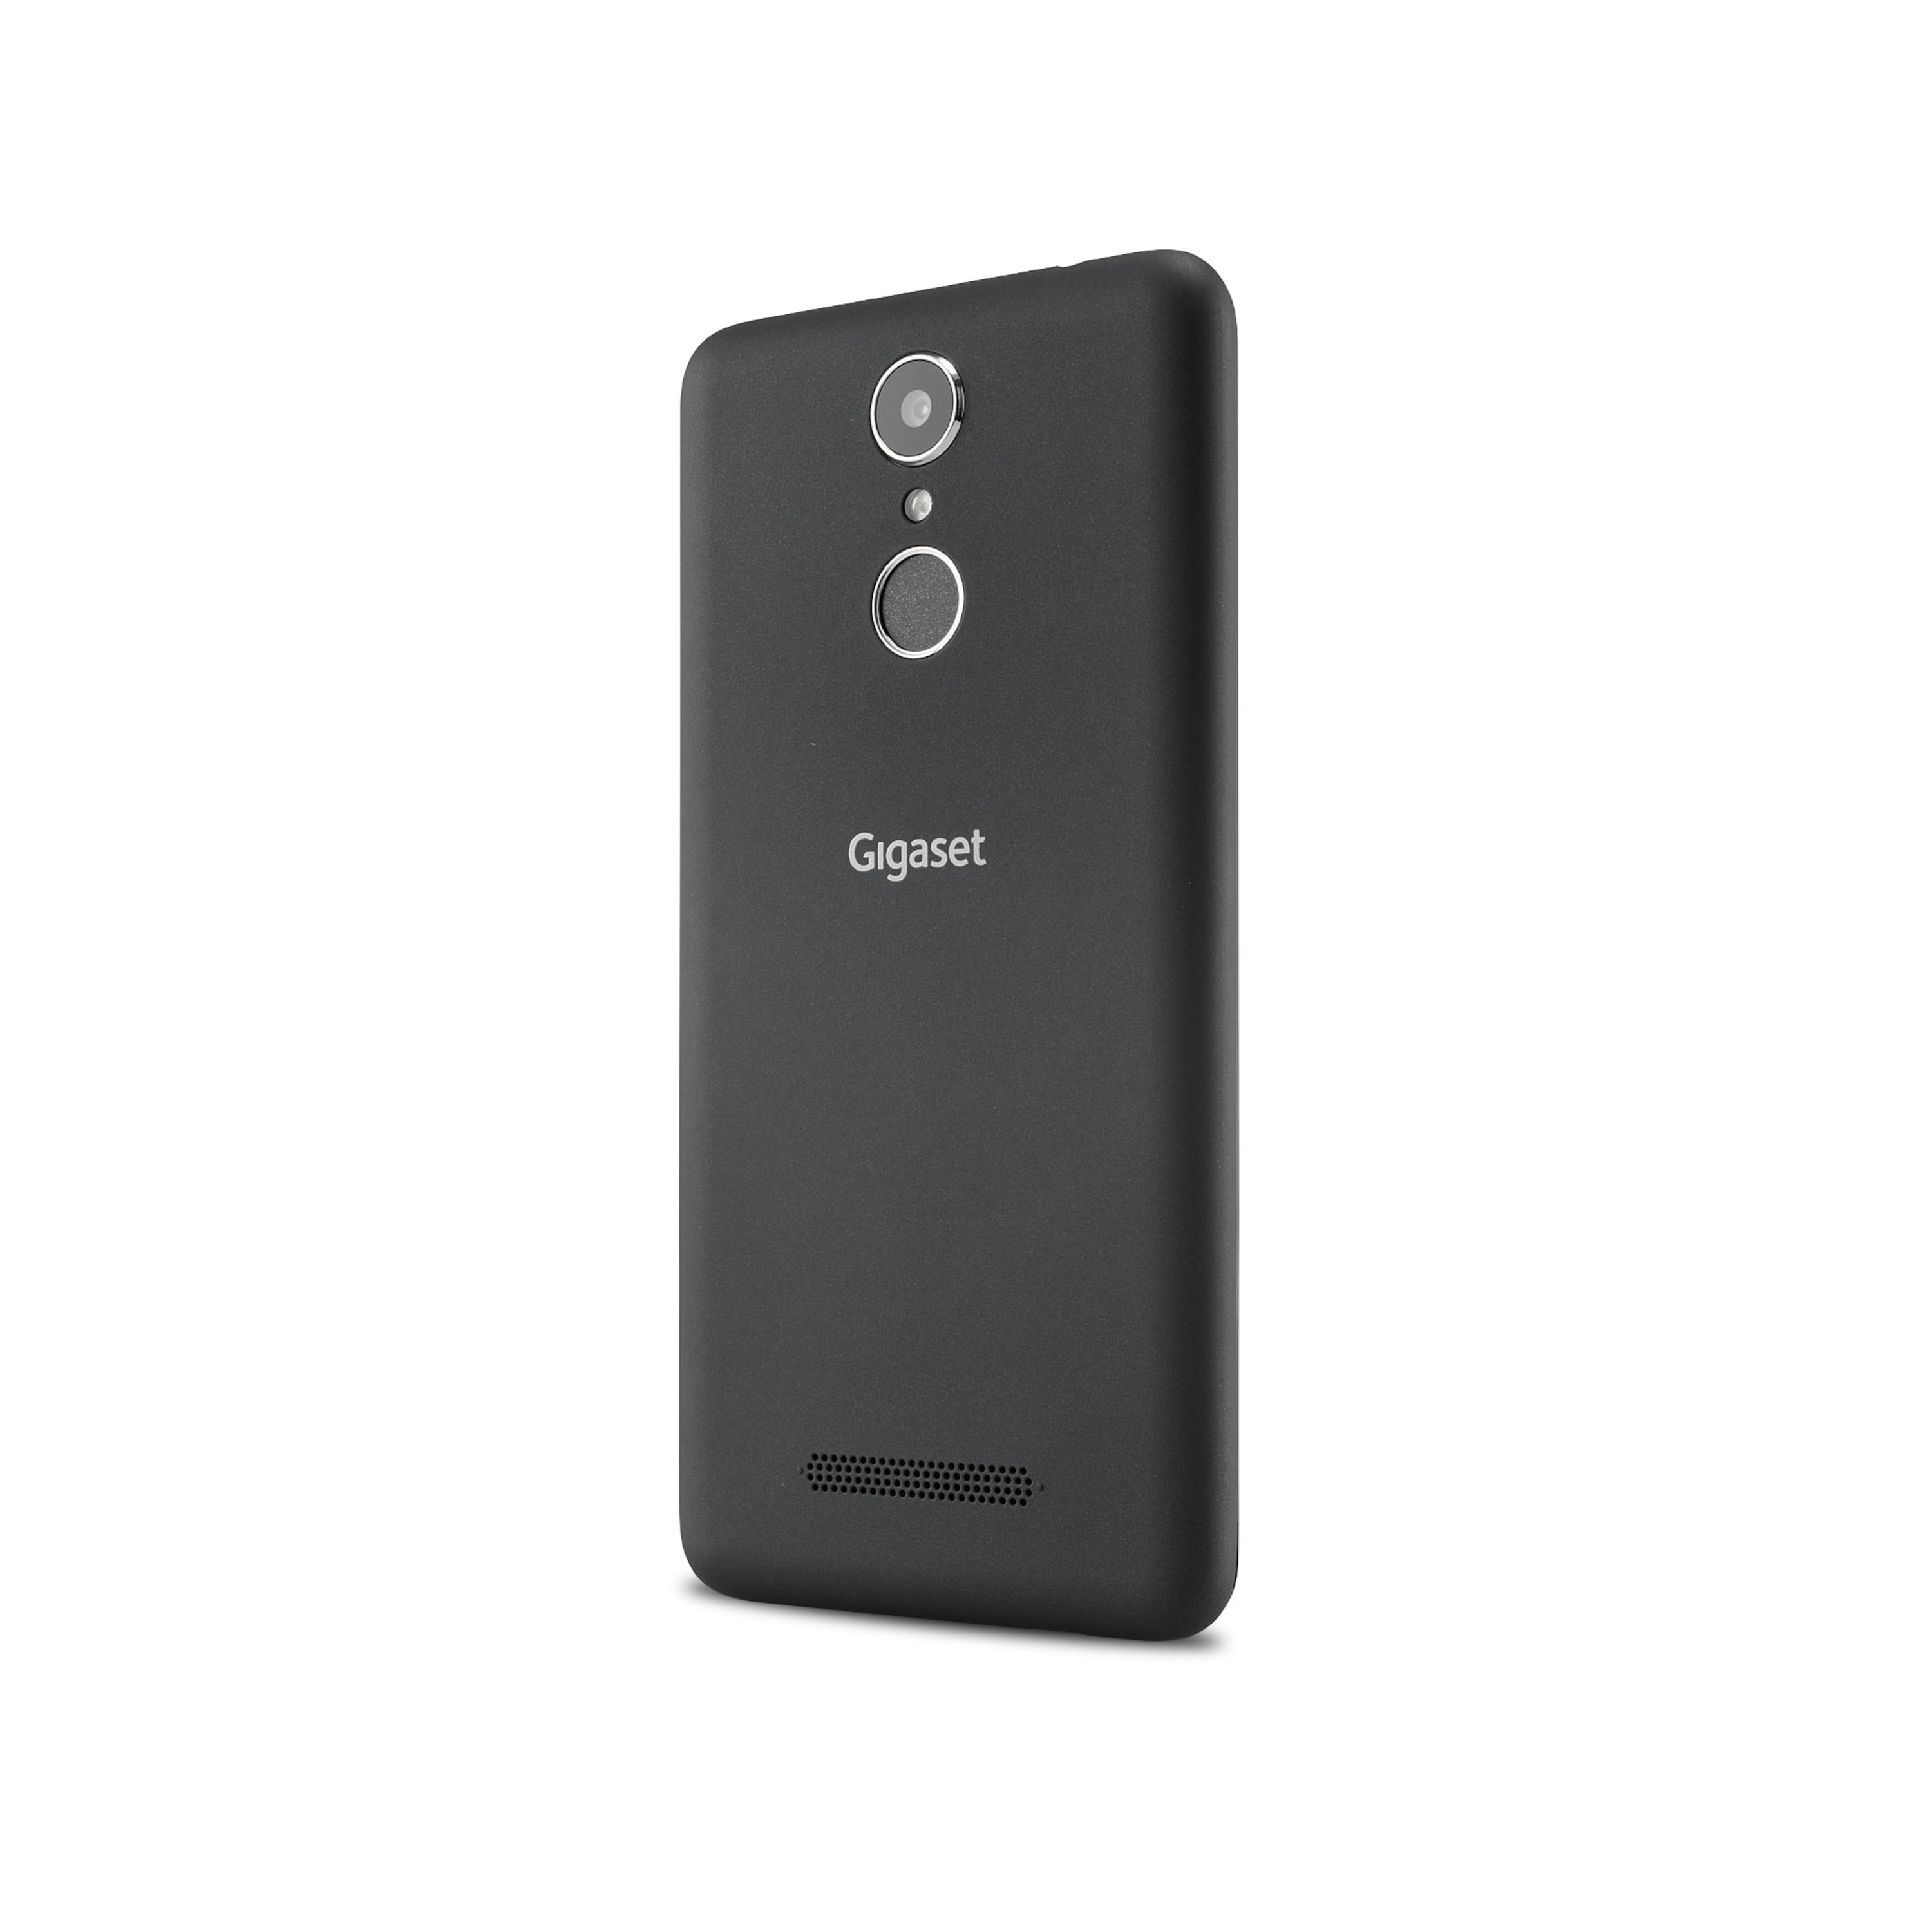 GIGASET GS 170, 12,7 cm (5"),Android™ 7.0, 16 GB Speicher, Quad-Core-Prozessor, LTE, schwarz  (B-Ware)